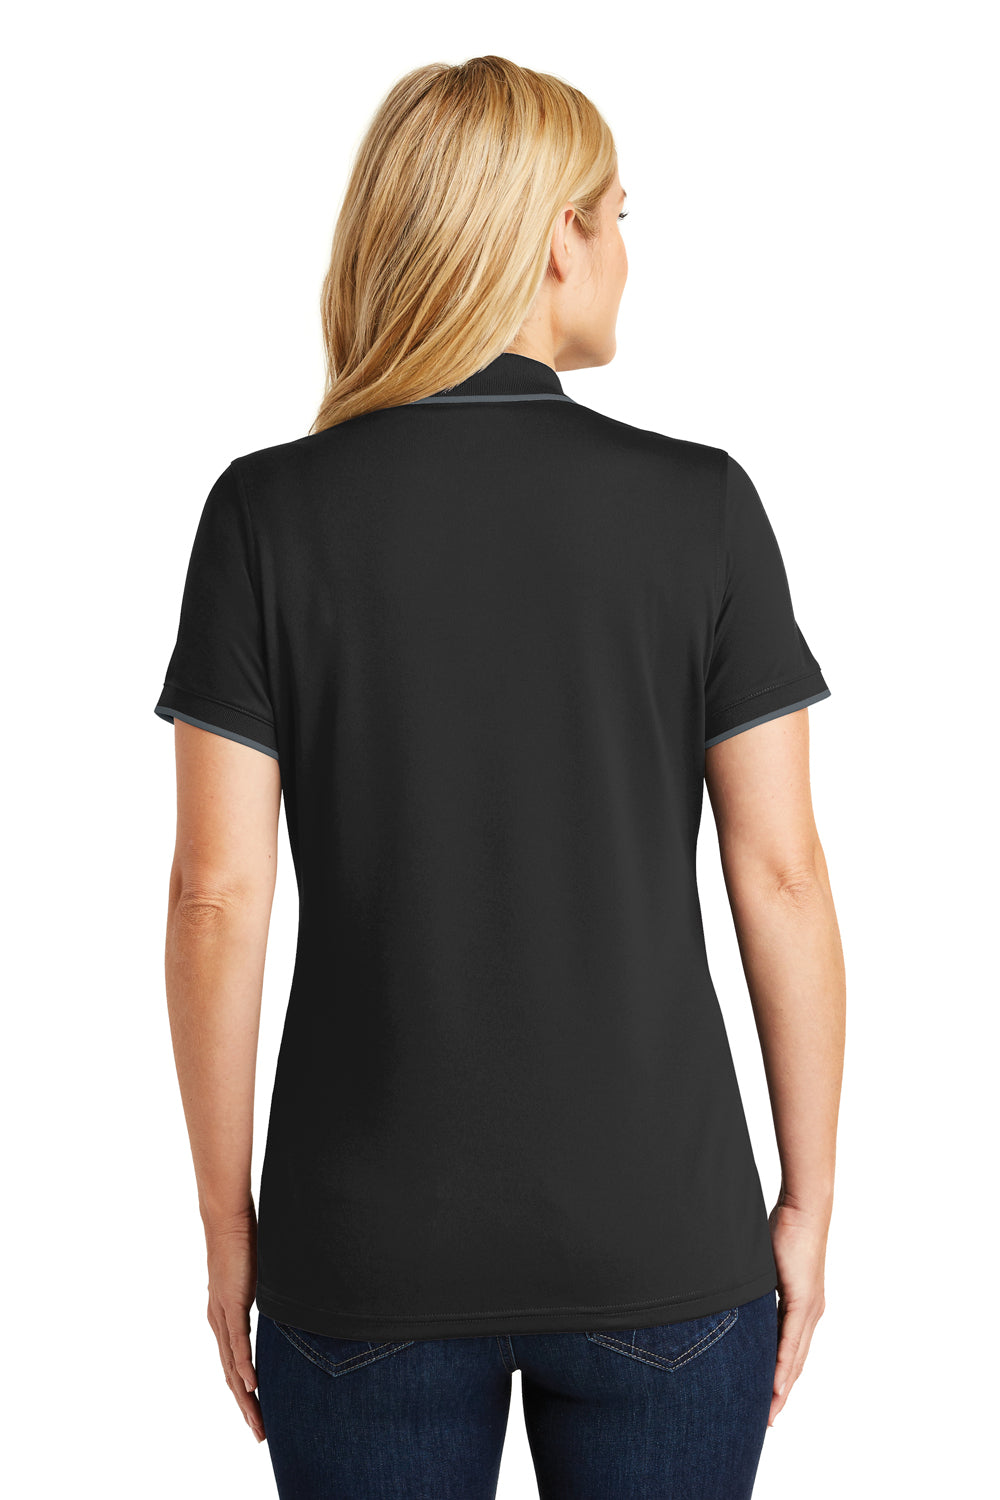 Port Authority LK111 Womens Dry Zone Moisture Wicking Short Sleeve Polo Shirt Black/Graphite Grey Back